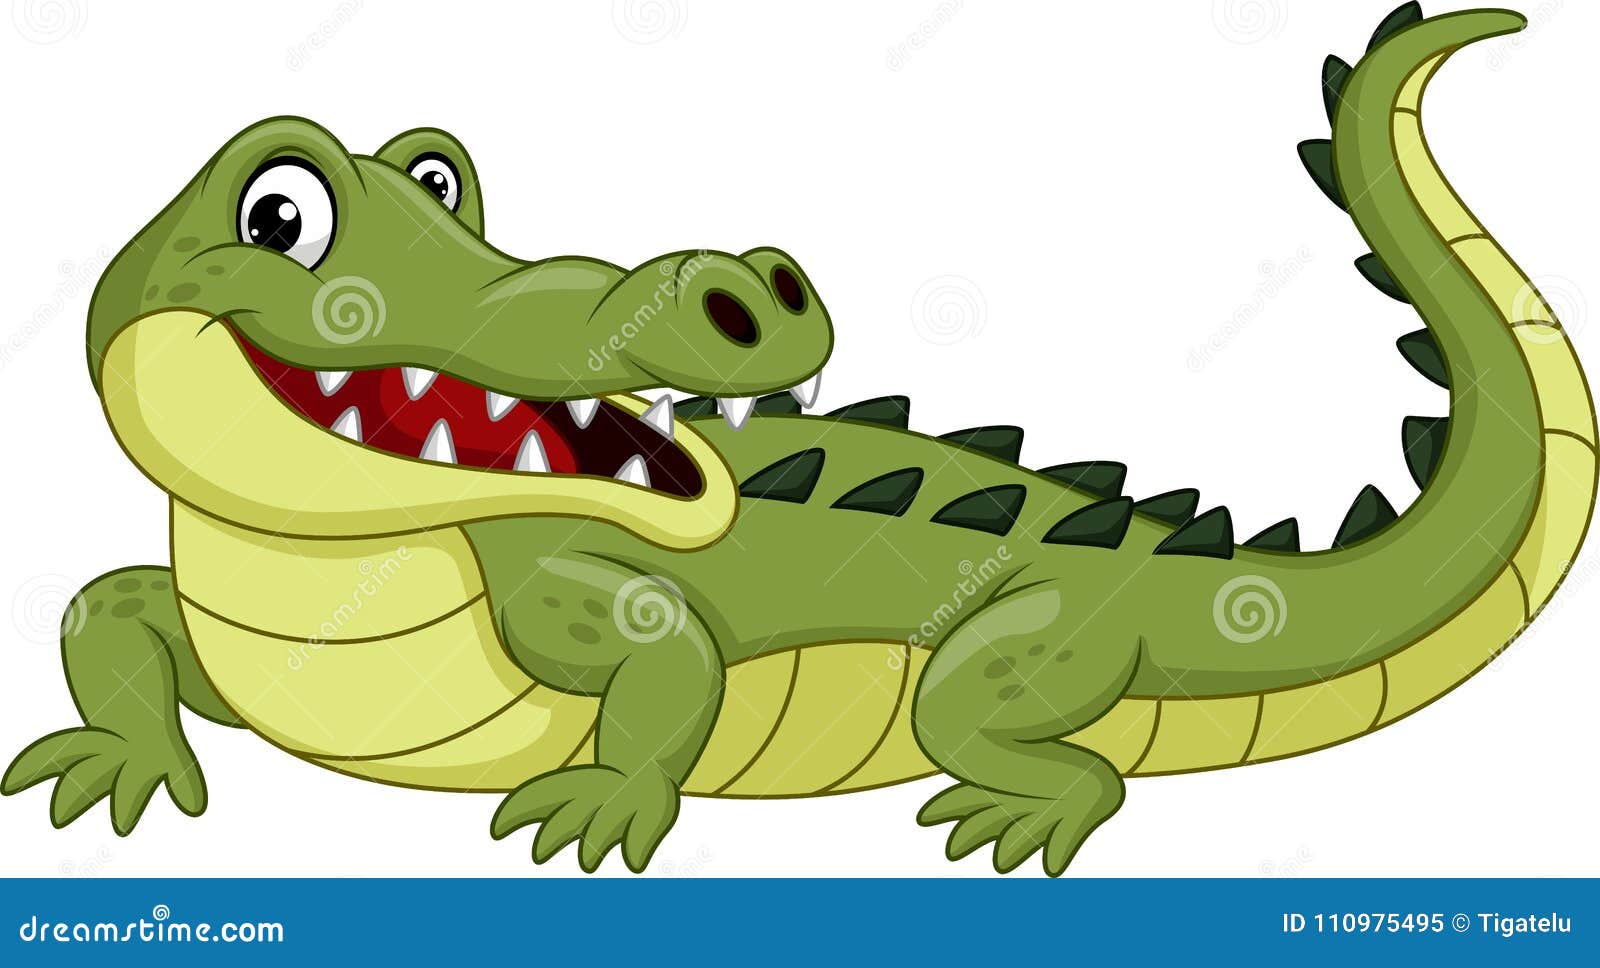 cartoon crocodile  on white background